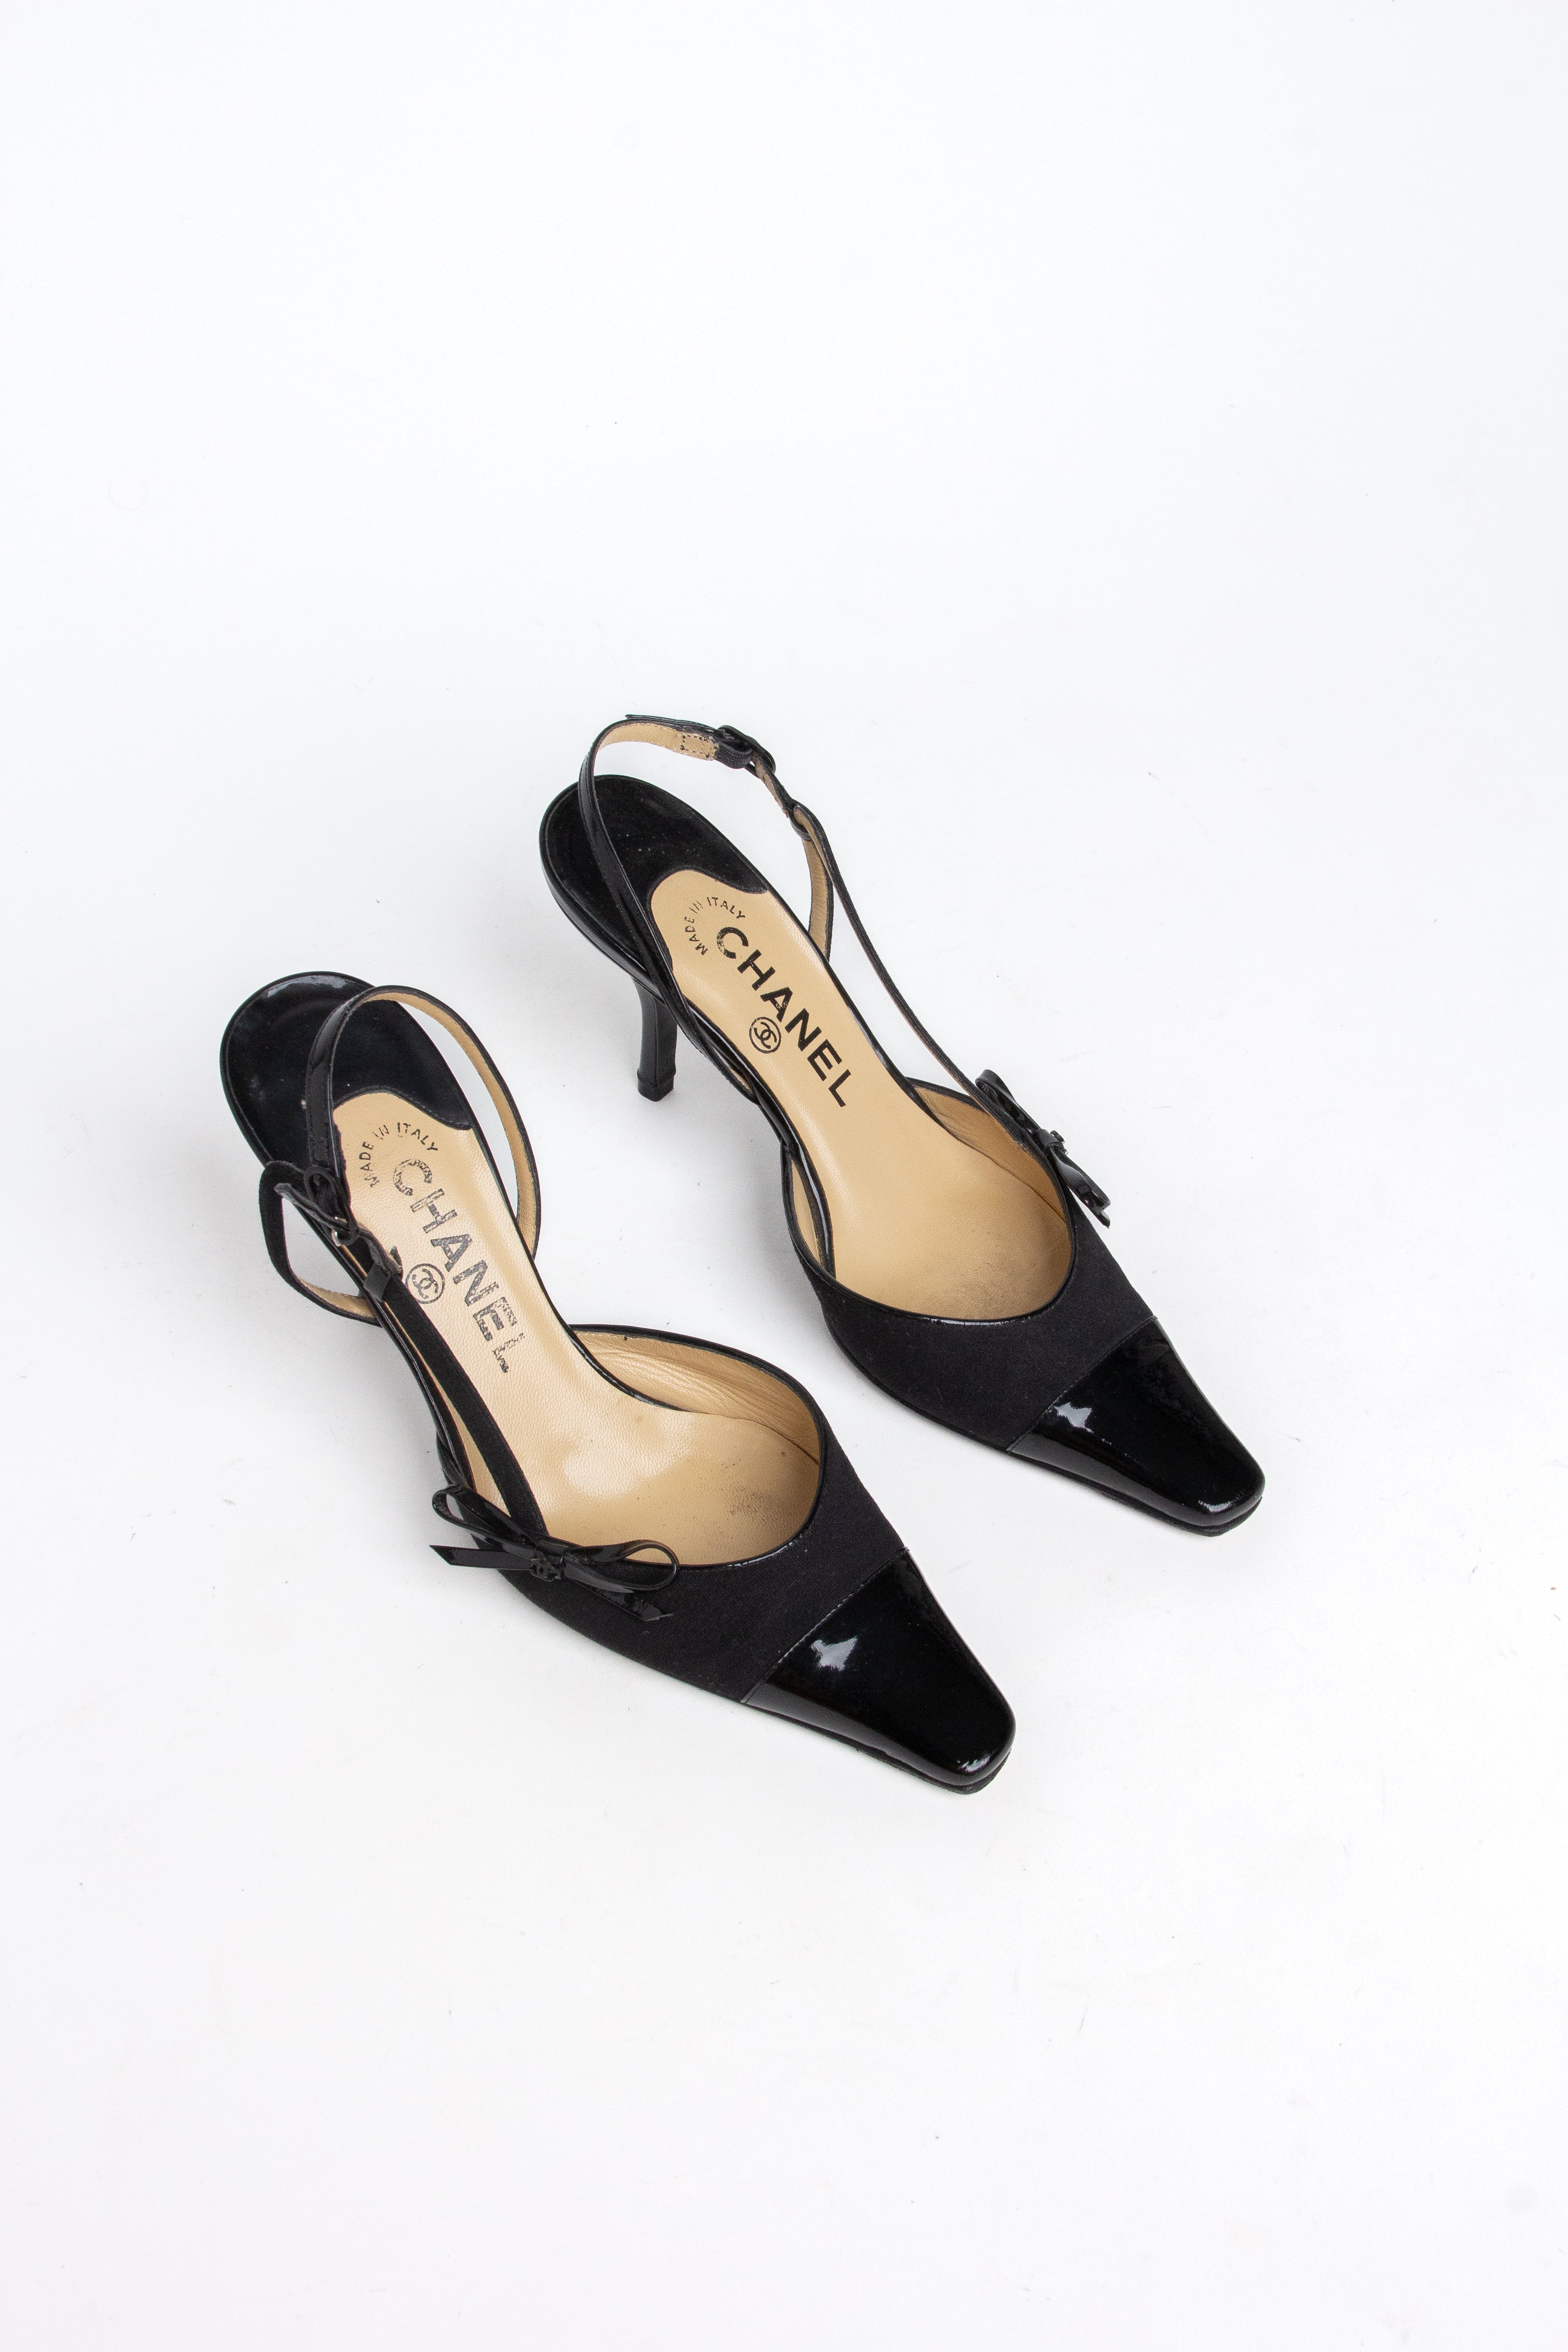 Chanel Leather Slingback Heels - Size 38